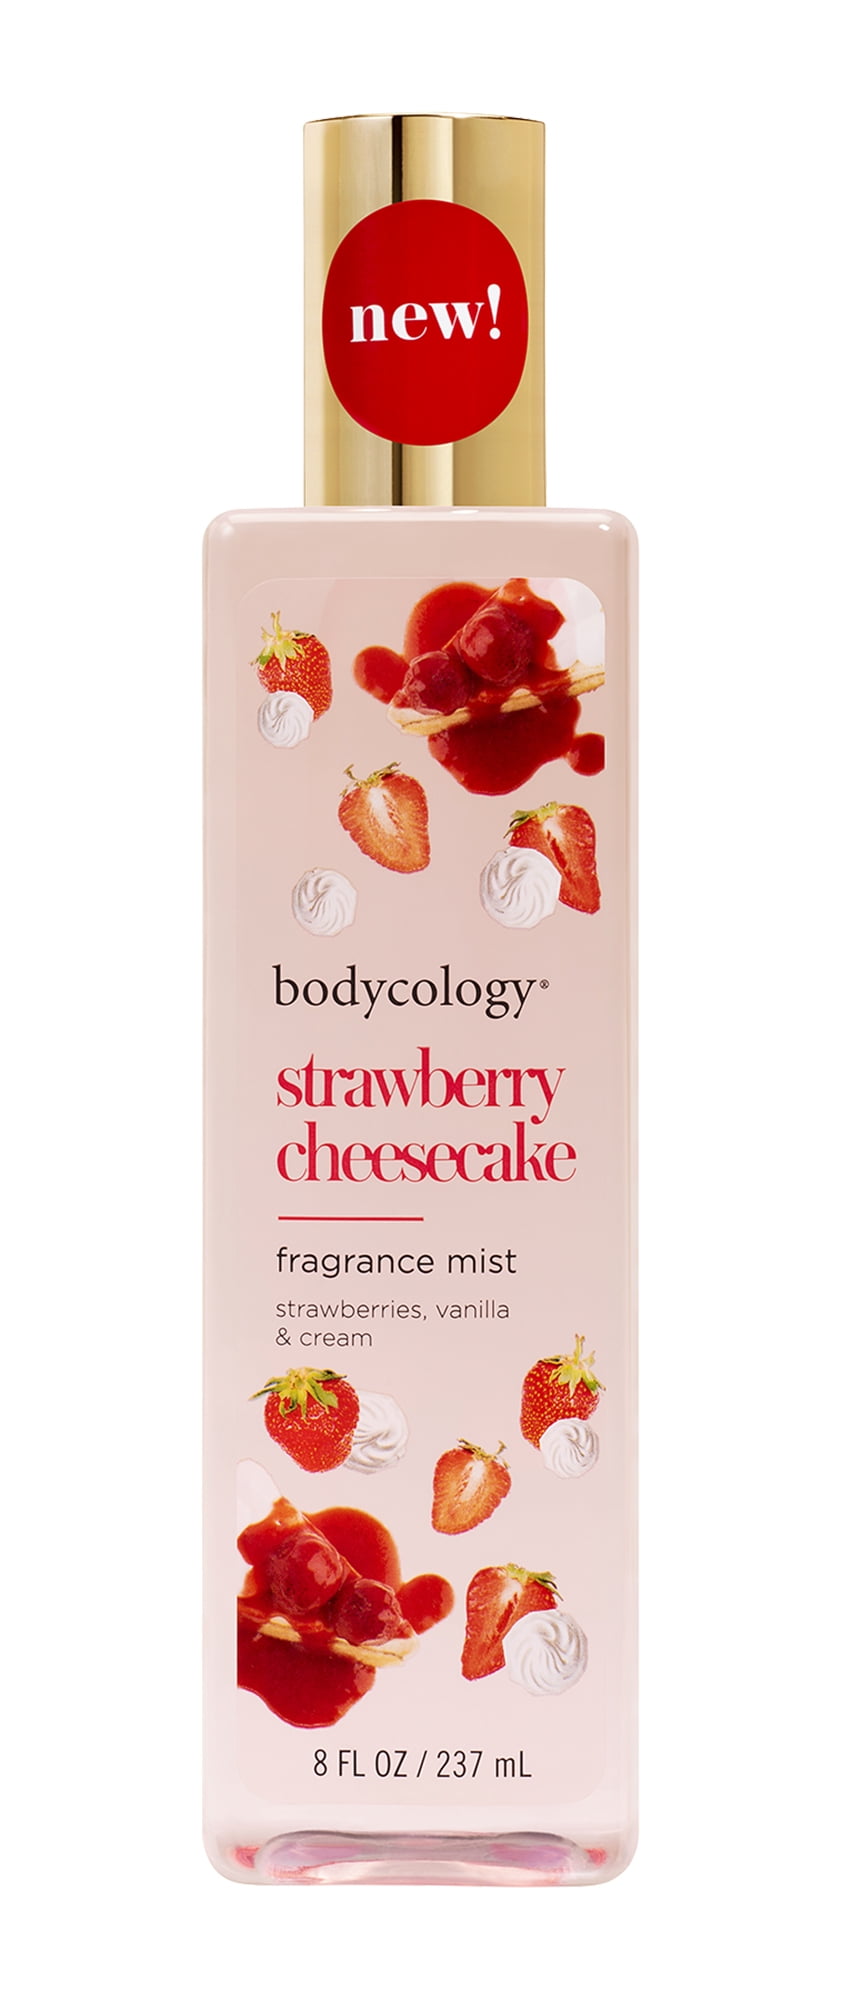 Bodycology Strawberry Cheesecake Fragrance Mist, 8 fl oz - Walmart.com